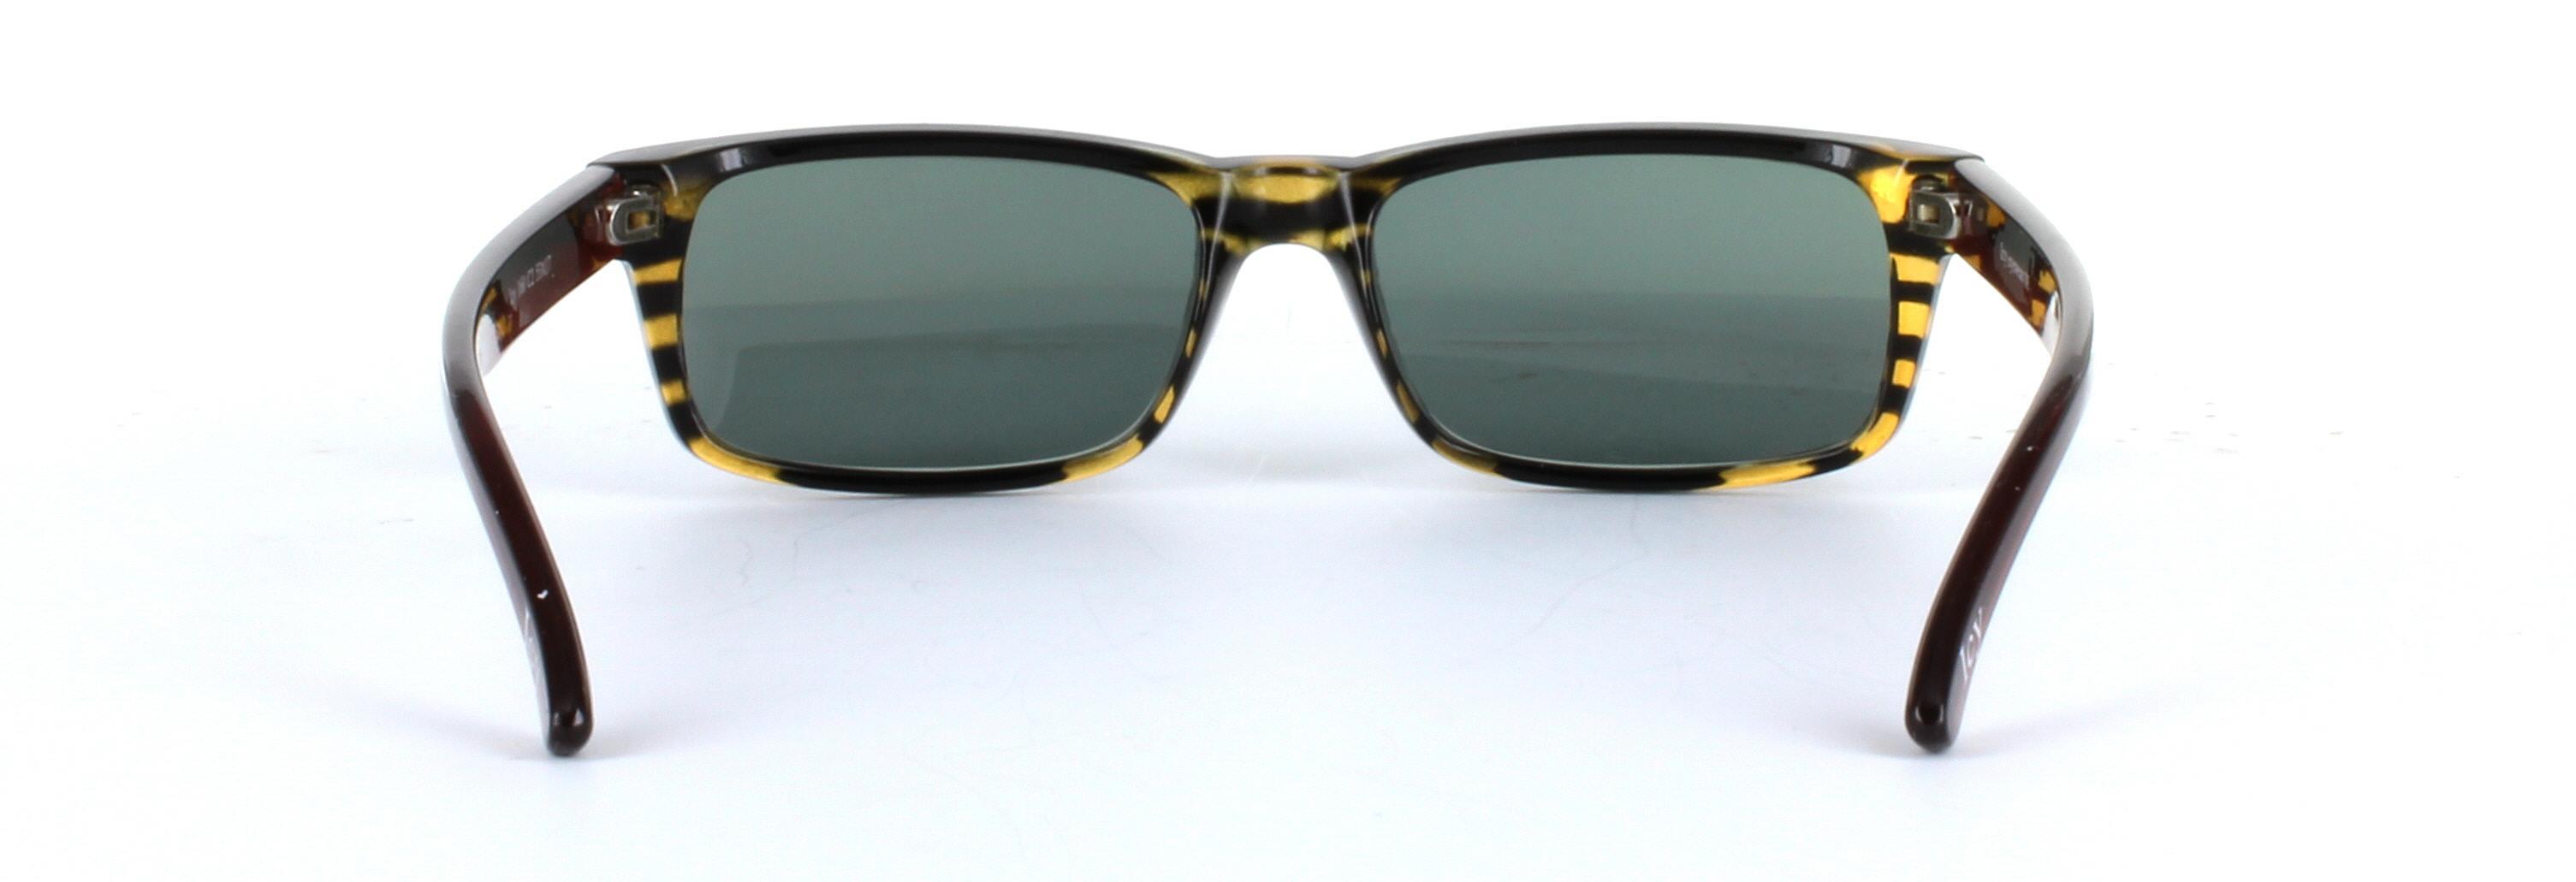 ICY 160 Brown Full Rim Rectangular Plastic Prescription Sunglasses - Image View 3